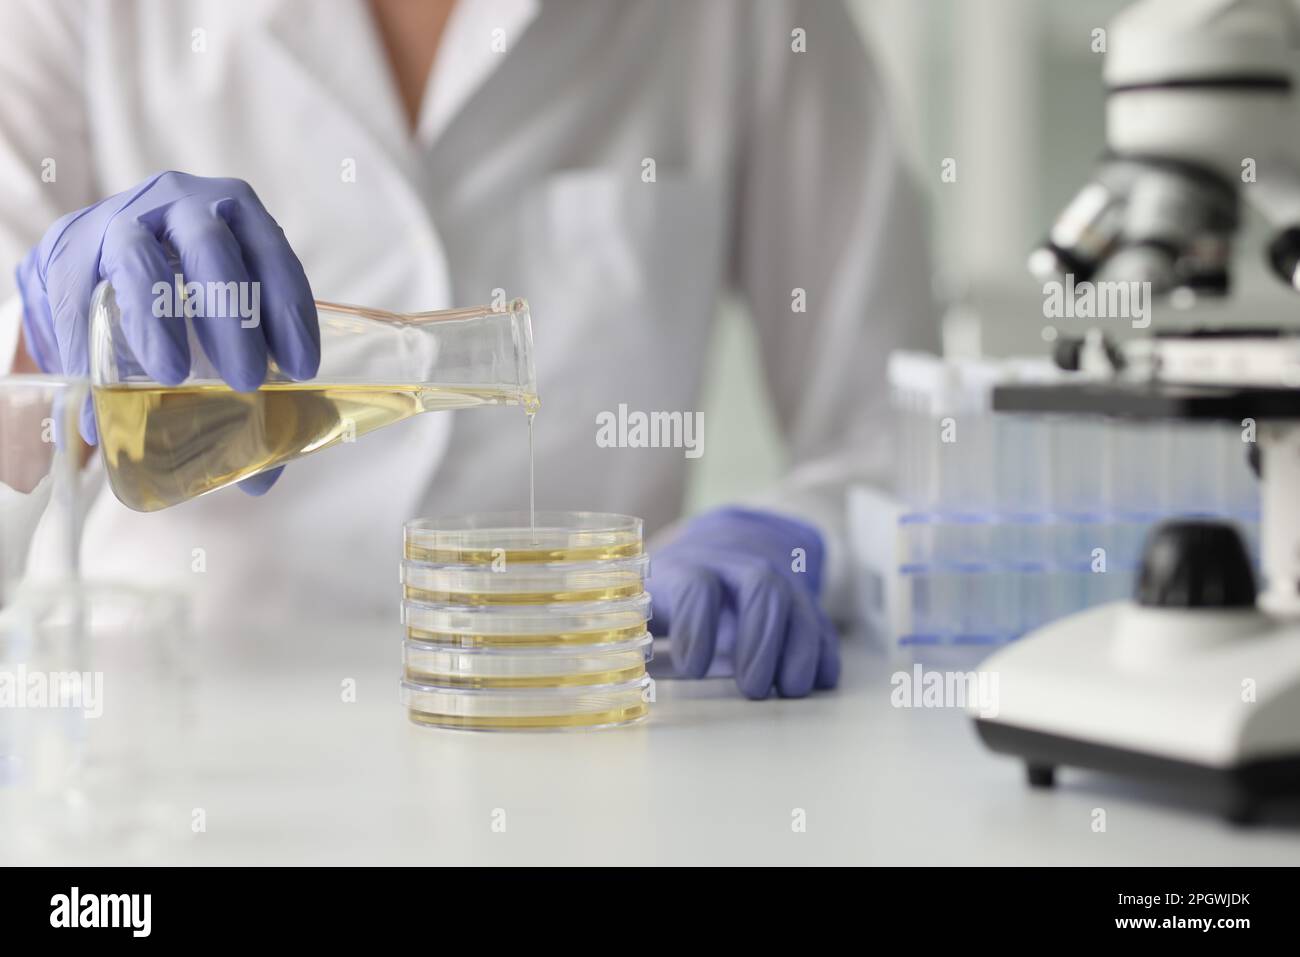 Scientist in gloves pours yellow liquid into glassware Stock Photo